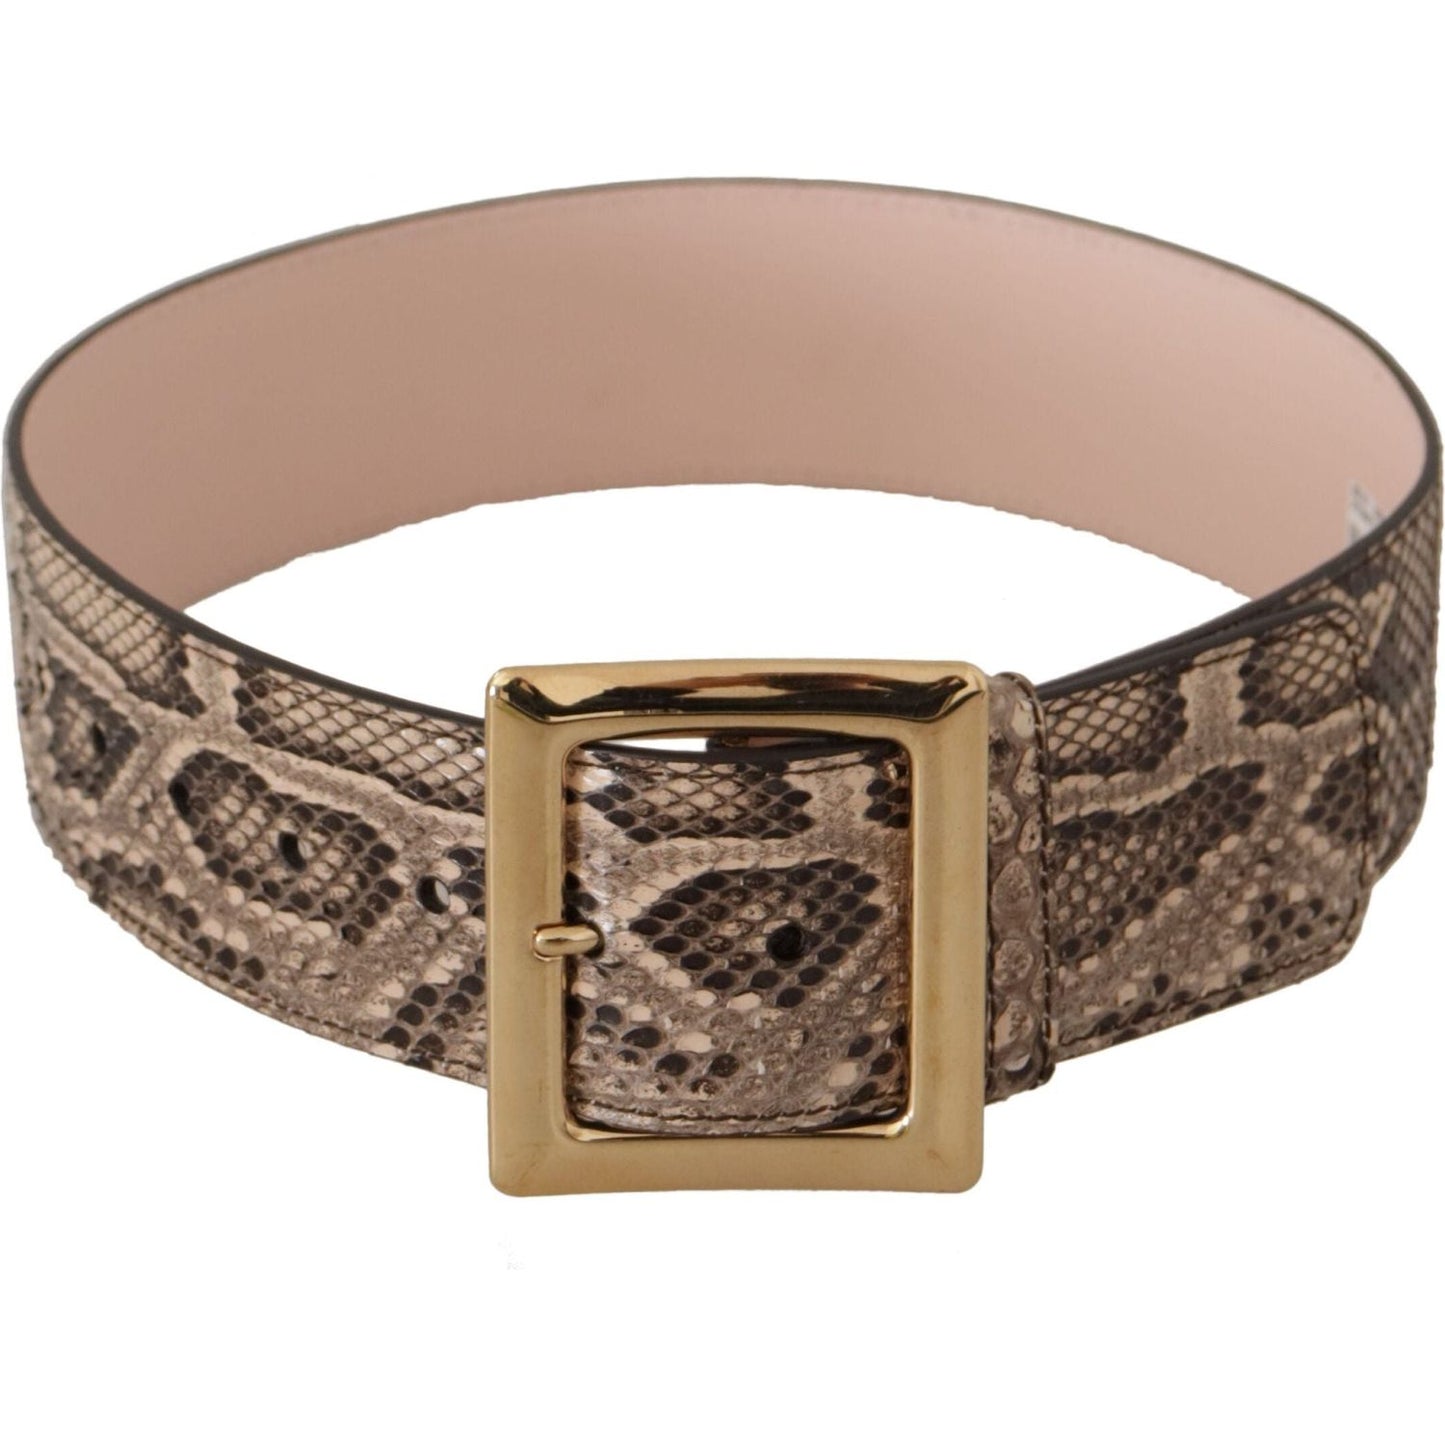 Dolce & Gabbana Elegant Leather Belt with Logo Buckle beige-exotic-leather-wide-gold-metal-buckle-belt